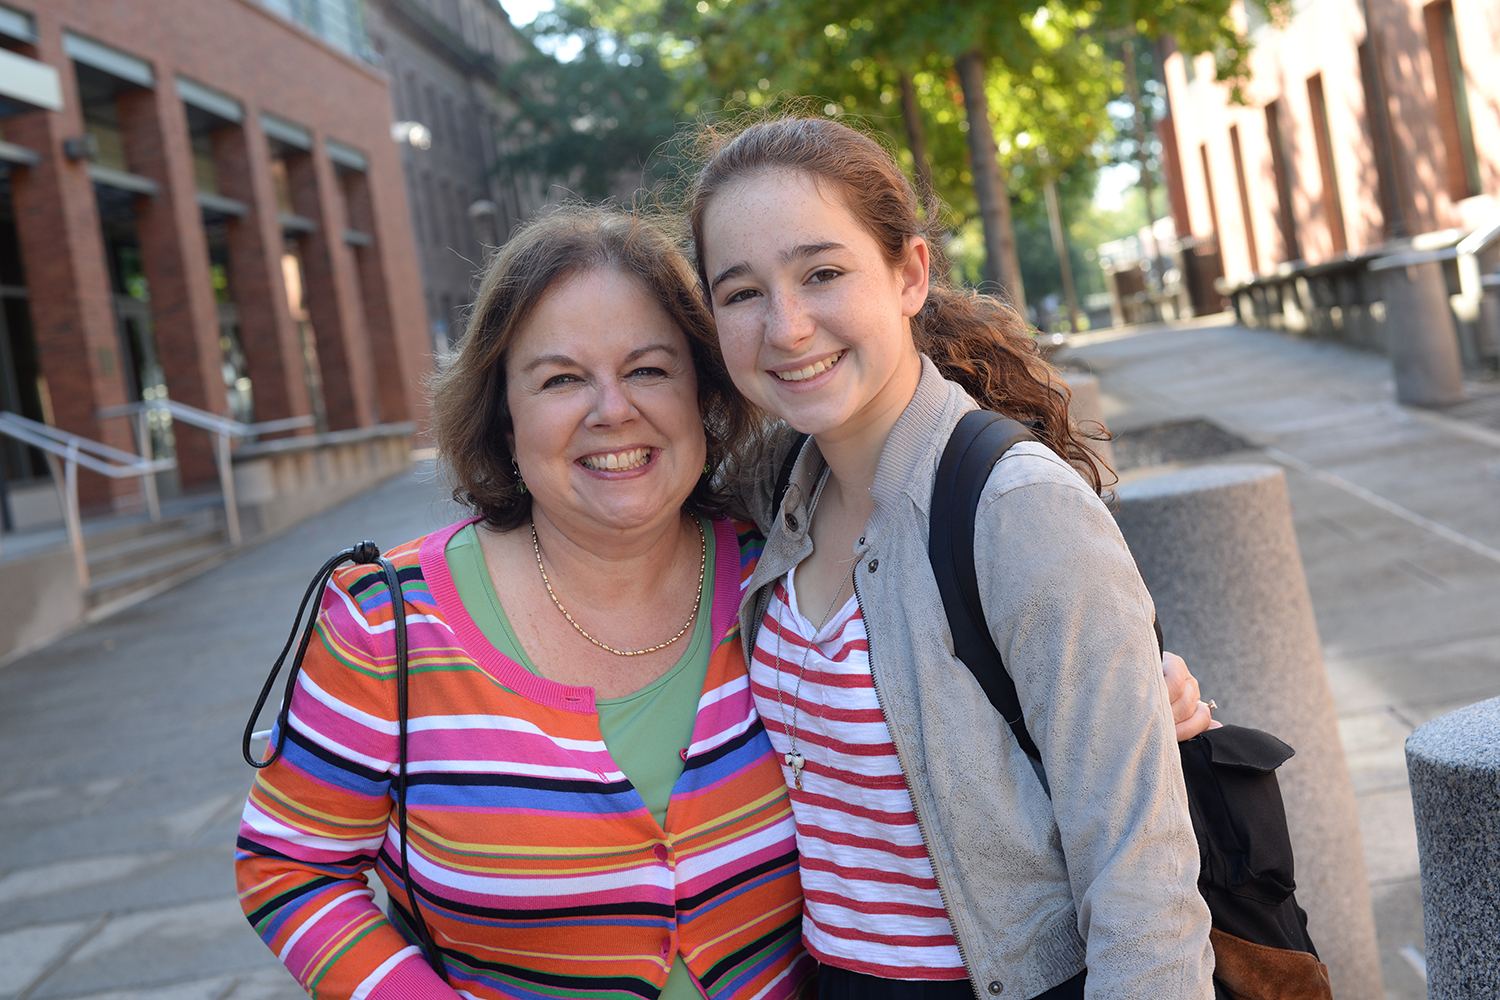 Diane LaPointe '79, P'17 of Bedford, N.Y. is attending Family Weekend with her daughter, Megan Dolan '17. 